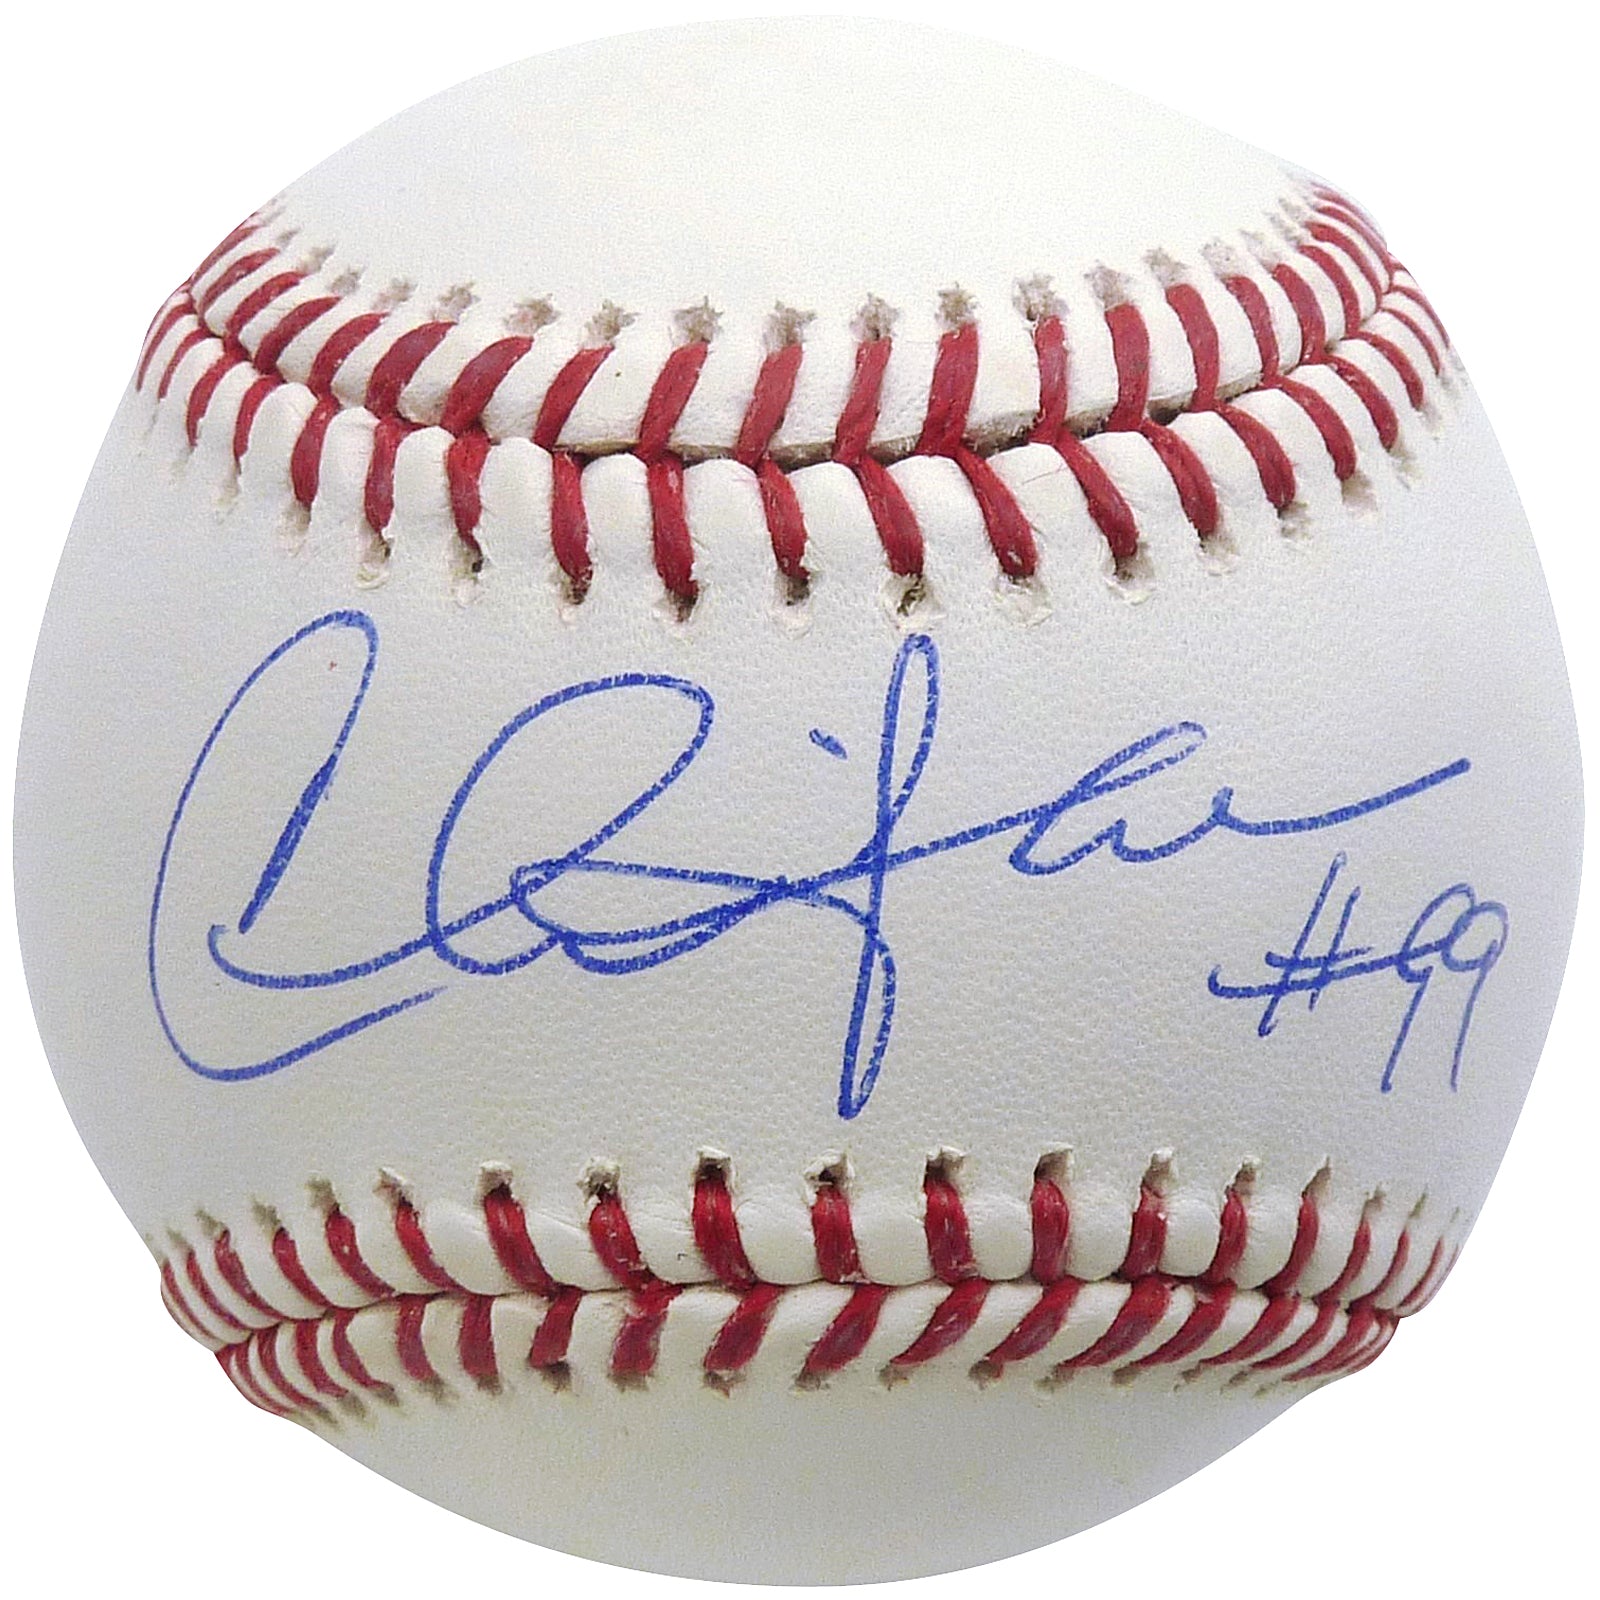 Charlie Sheen Autographed MLB Baseball - JSA